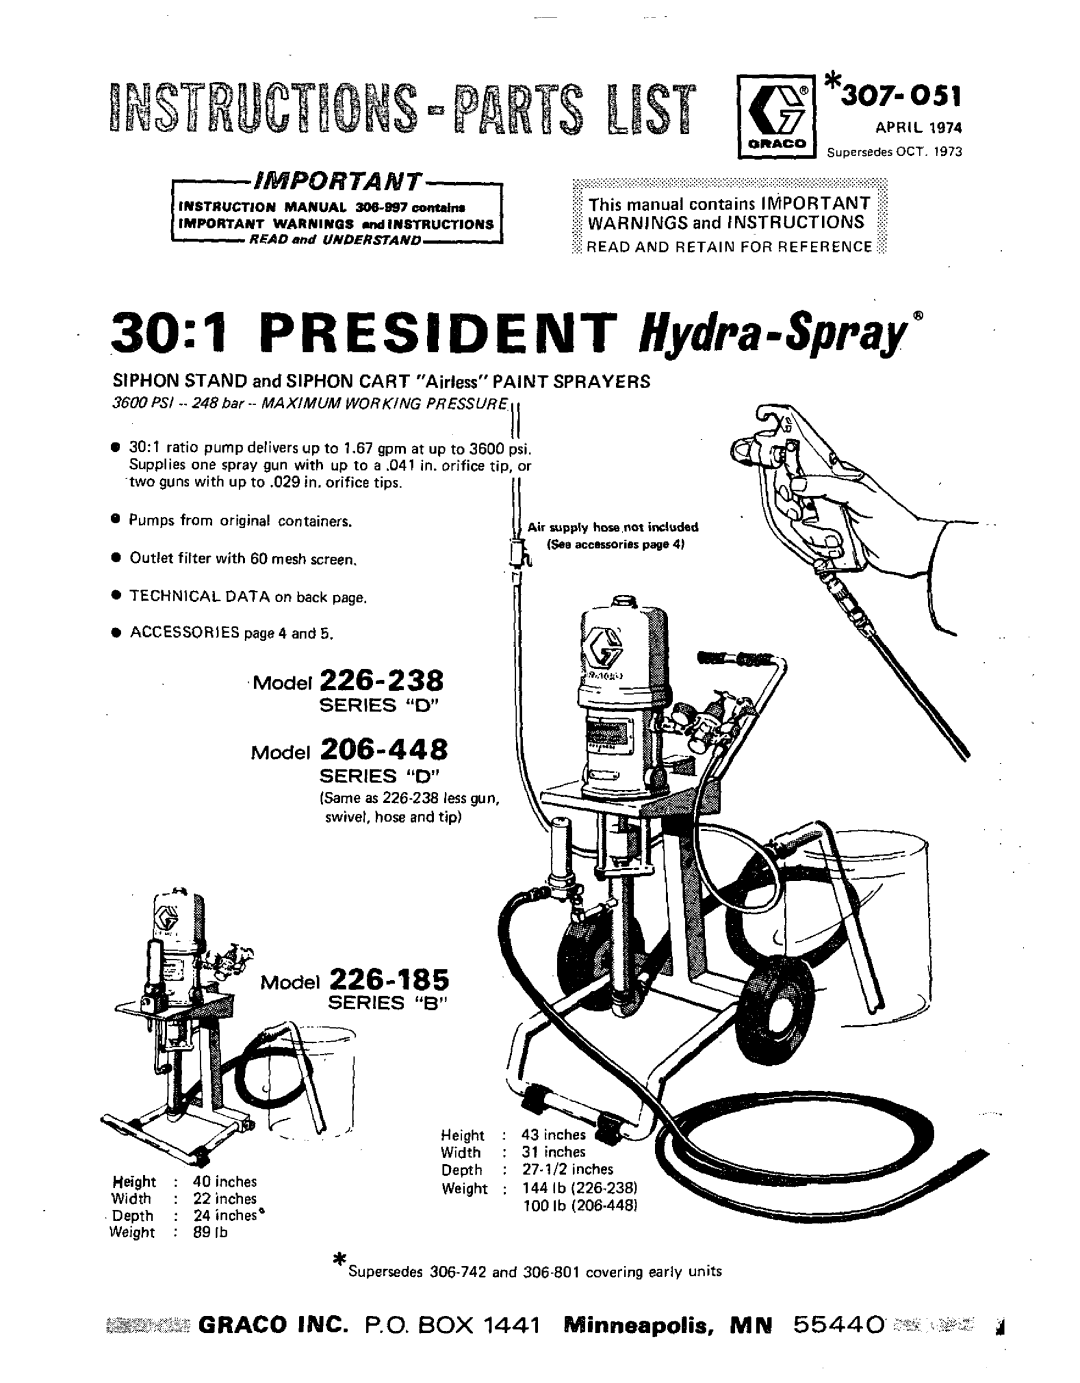 Graco Inc 307-051, 306-997, 306-801, 306-742, 226-238 manual Series “D”, Series “B”, PR ESIDENT Hydra-Spray”, Model, 89 Ib 